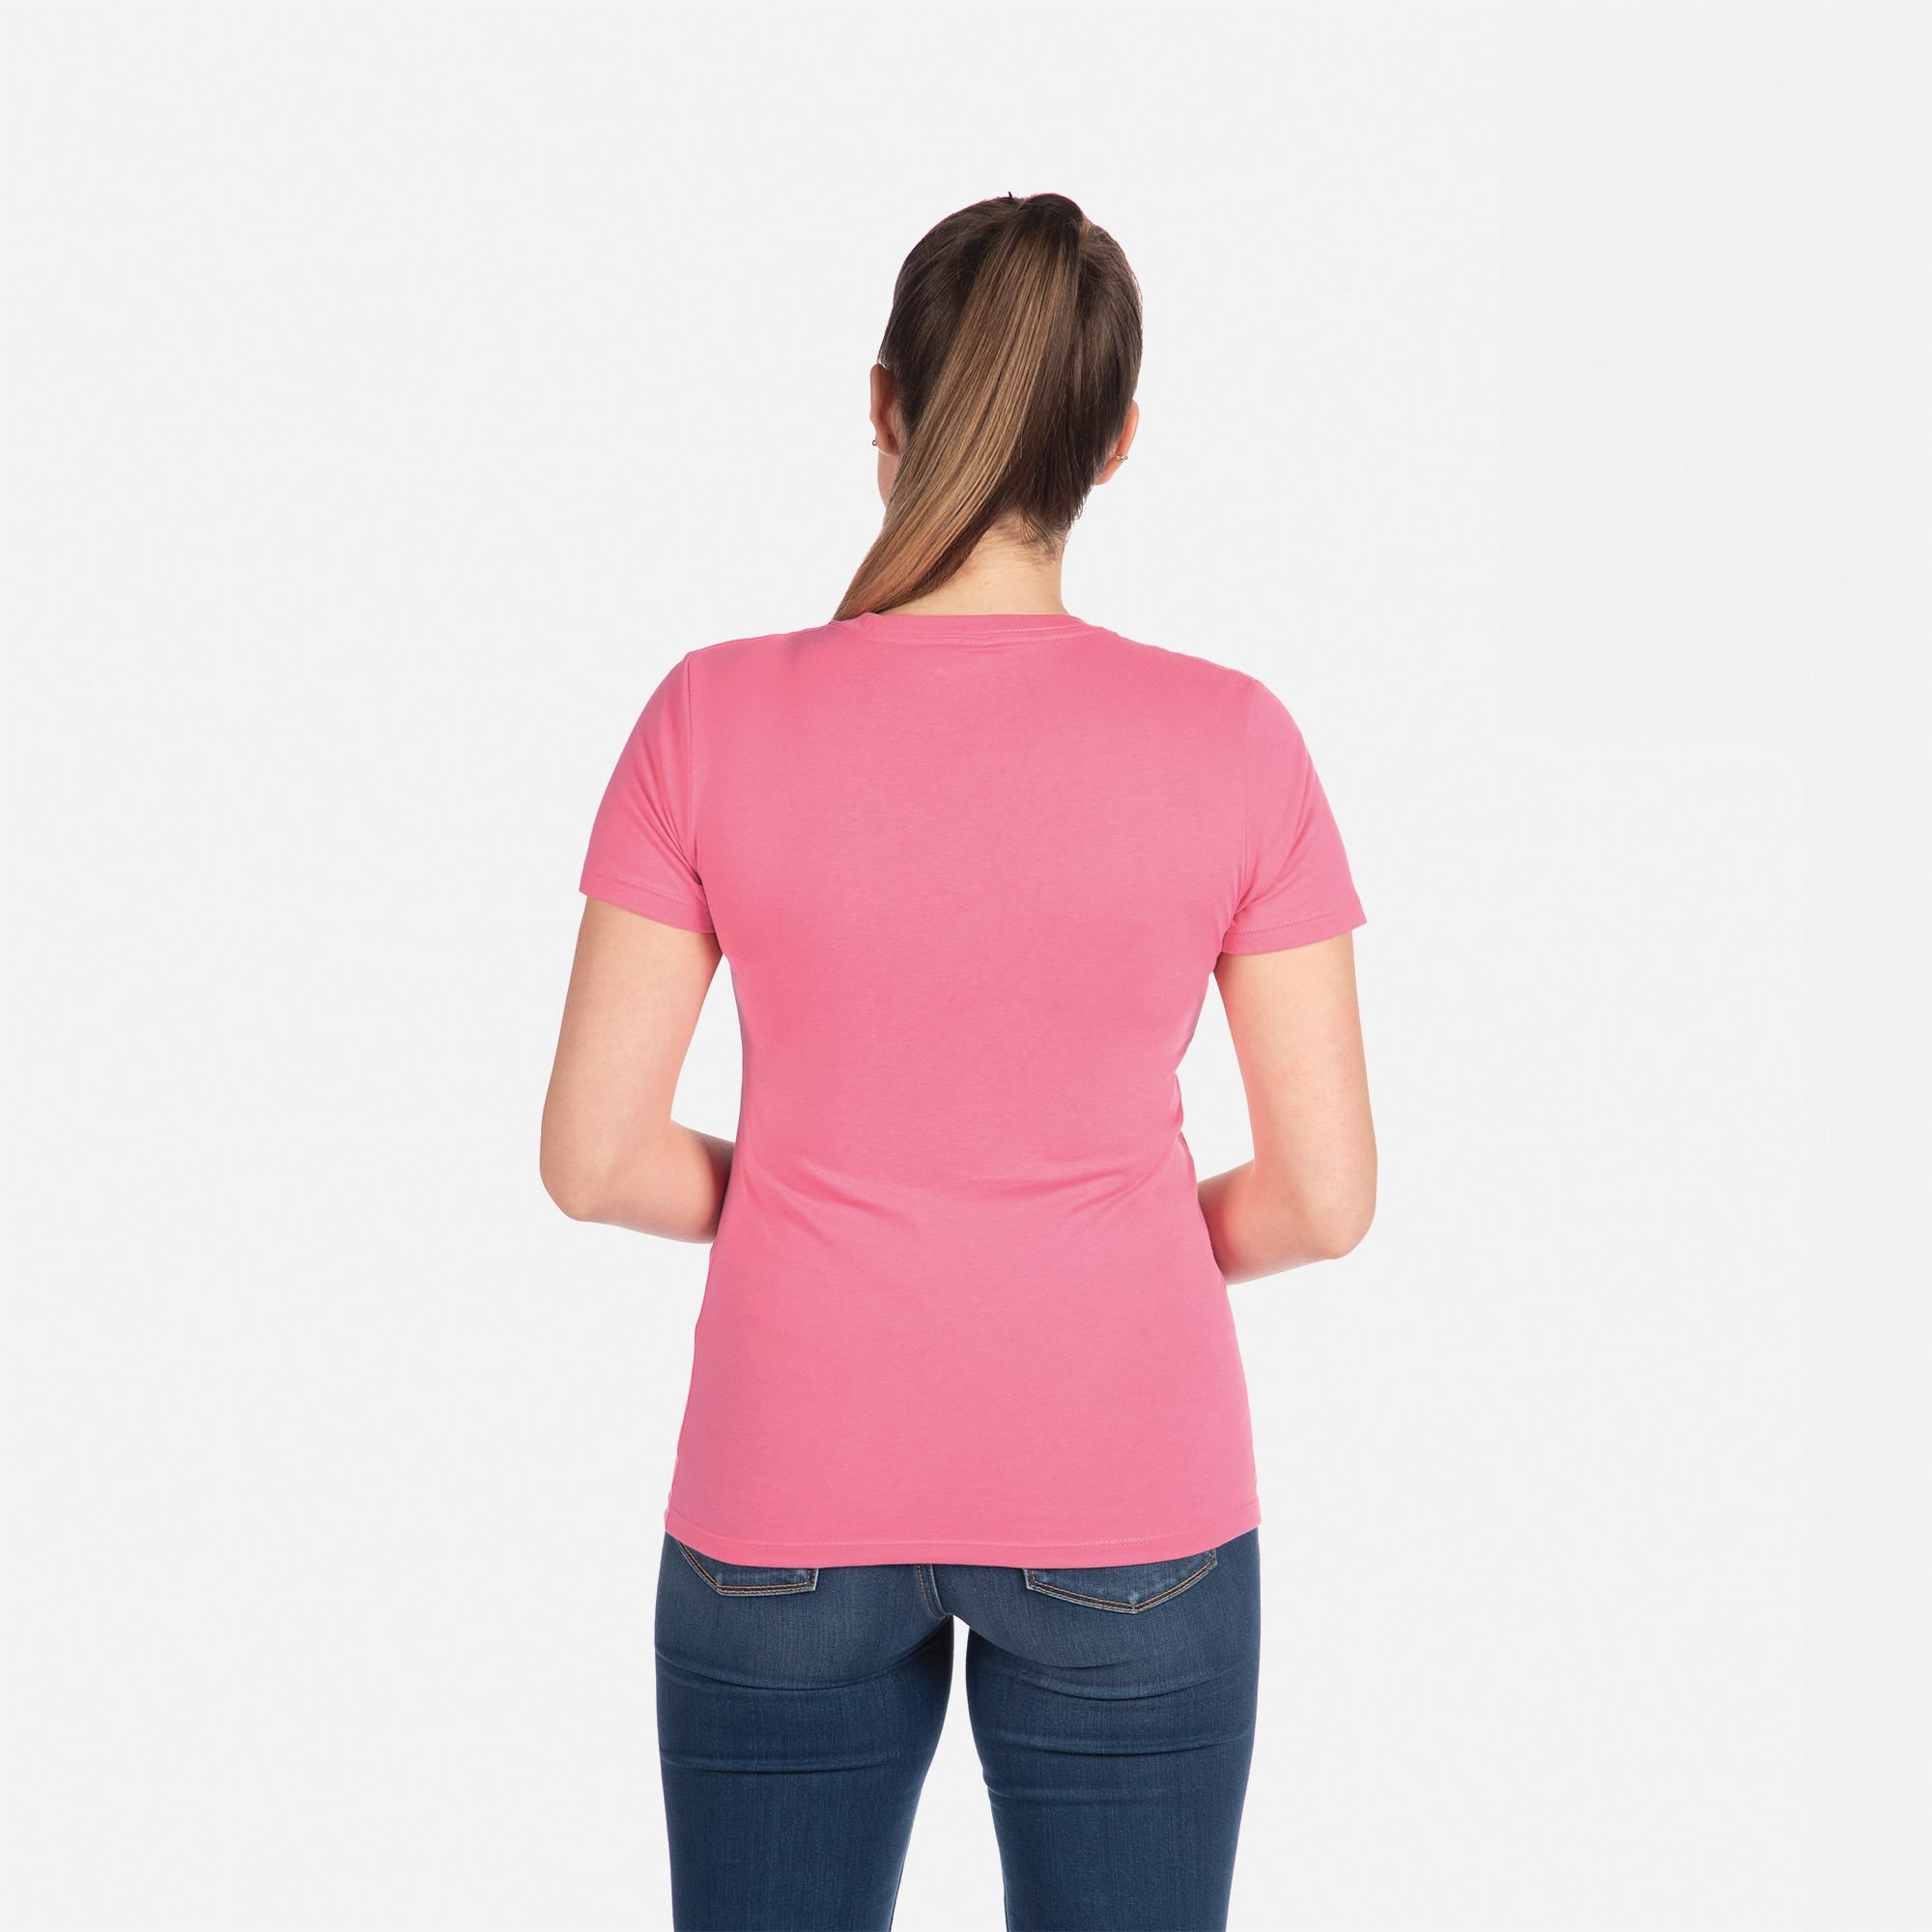 Cotton Boyfriend T-Shirt Hot Pink 3900 Next Level Apparel Back View